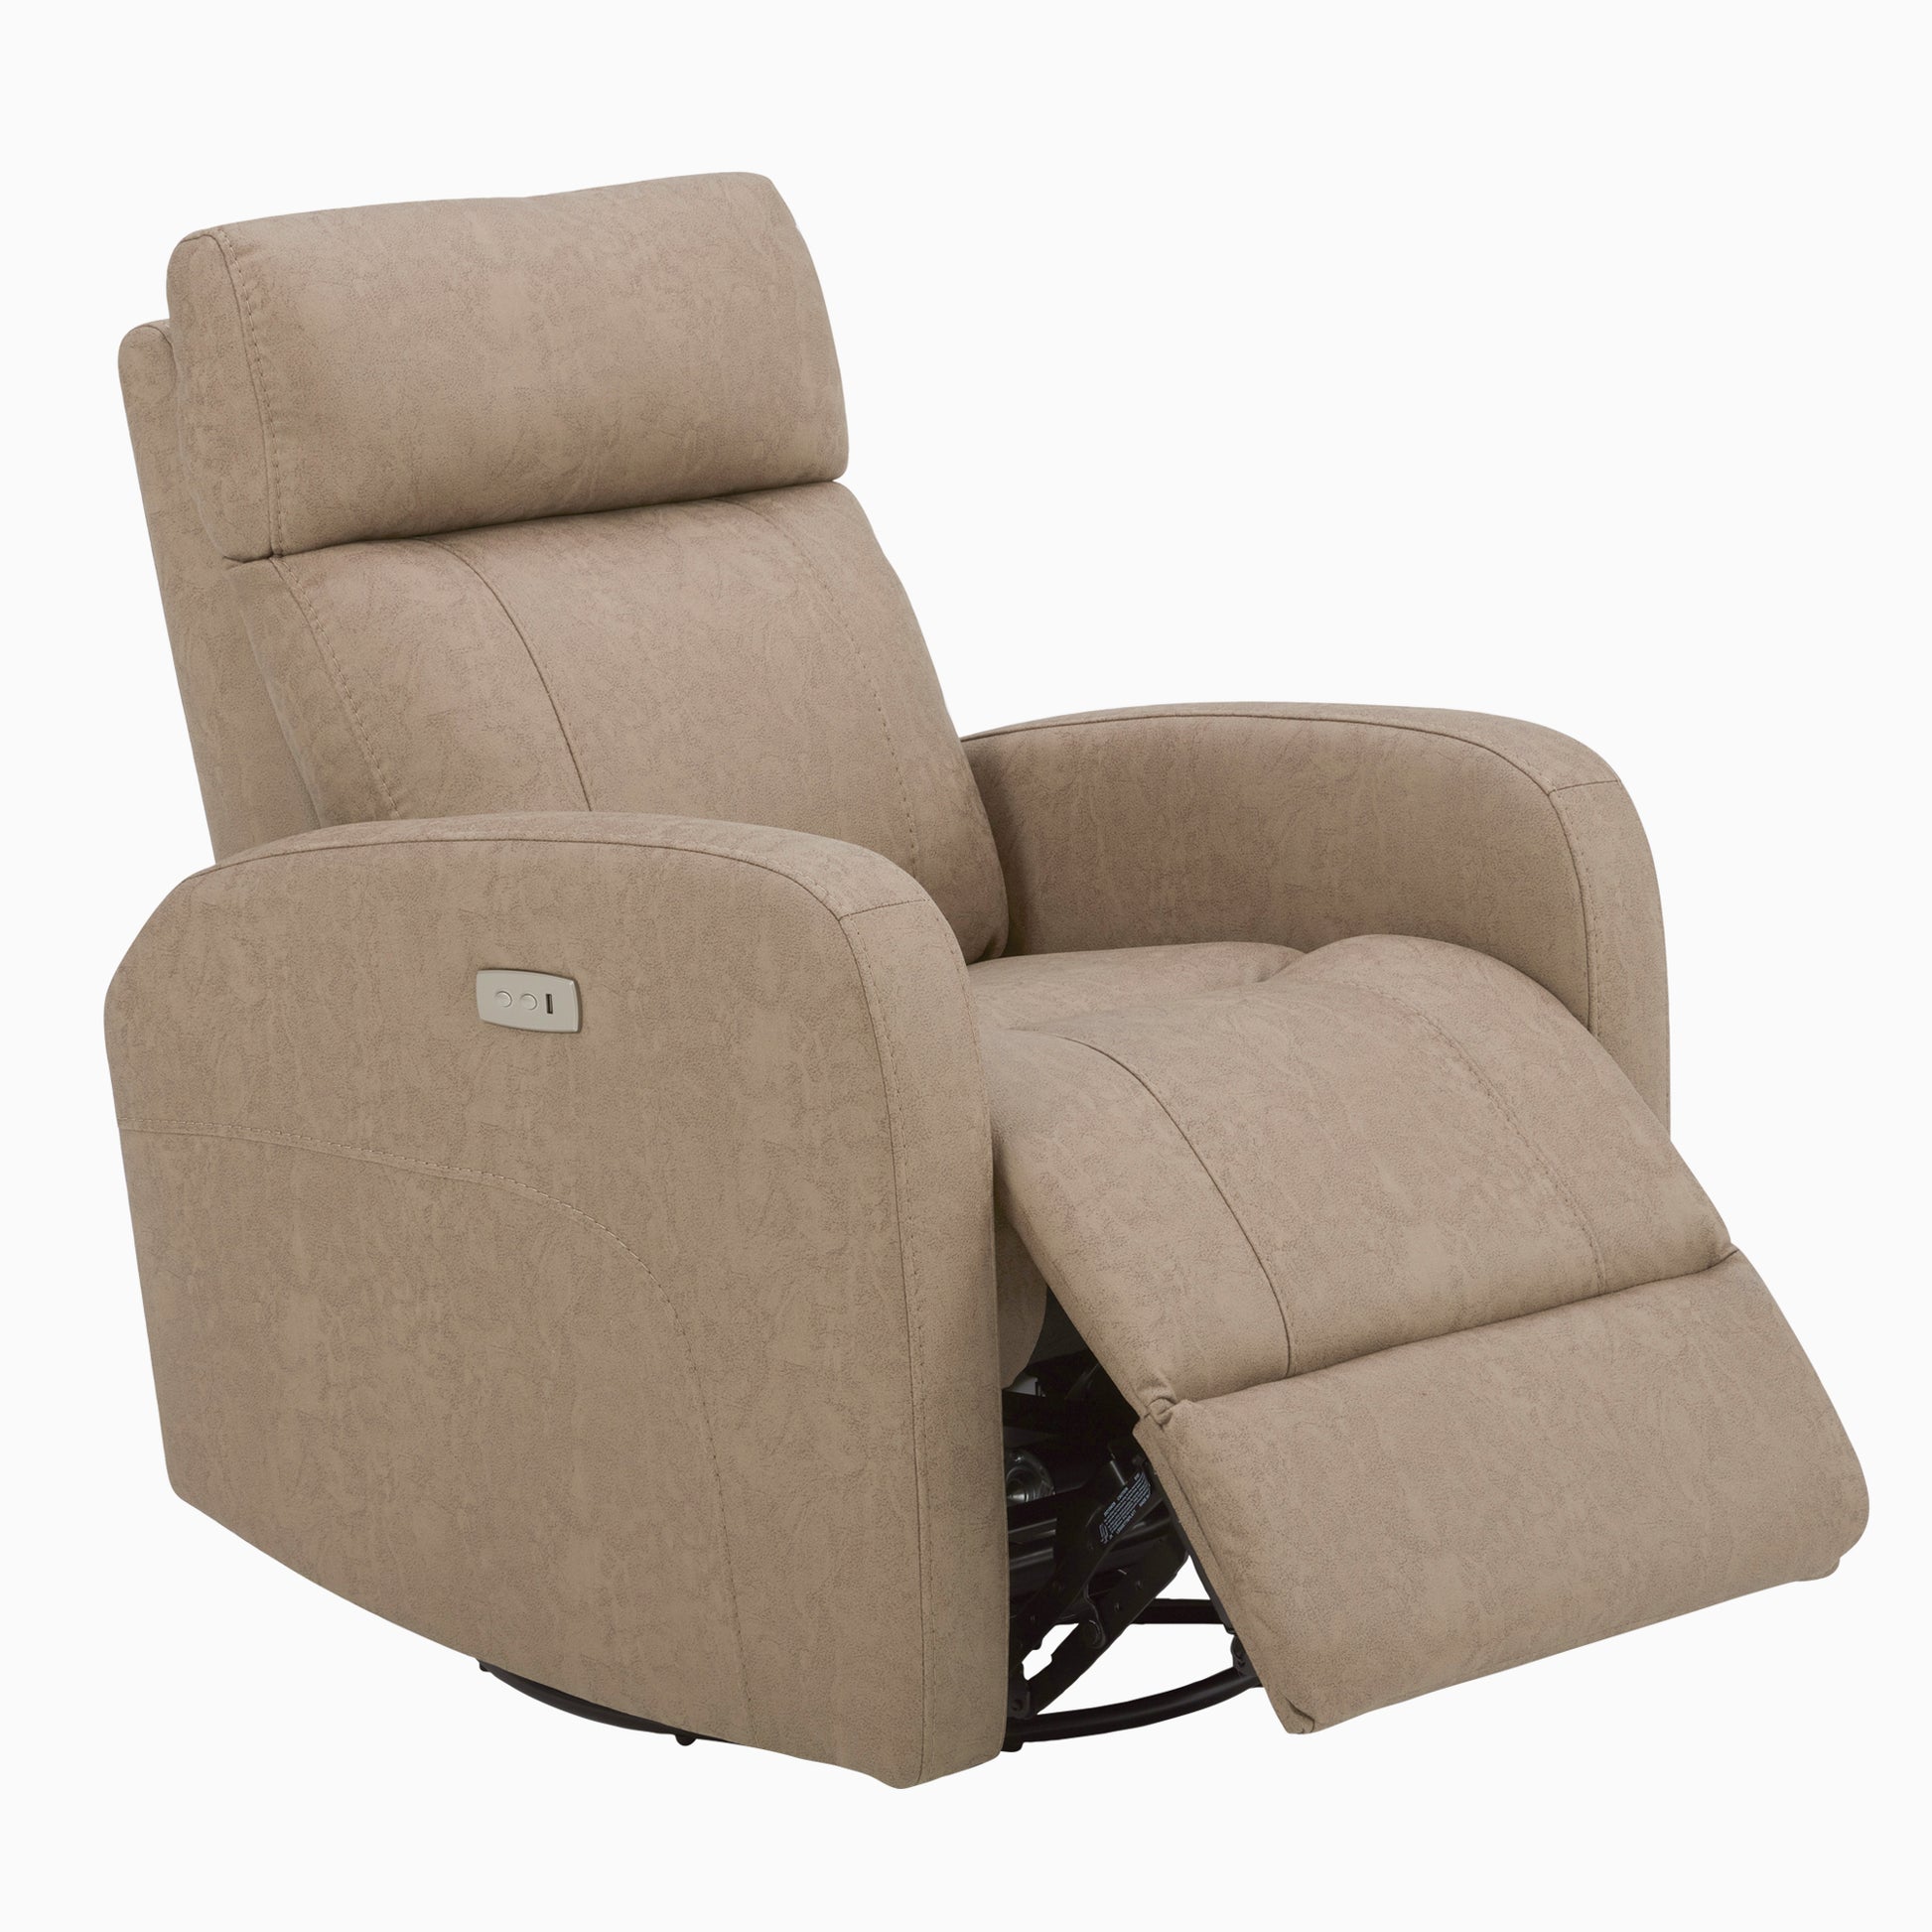 CHITA LIVING-Joy Power Swivel Recliner with Manual Headrest-Recliners-Micro Fiber-Light Brown-